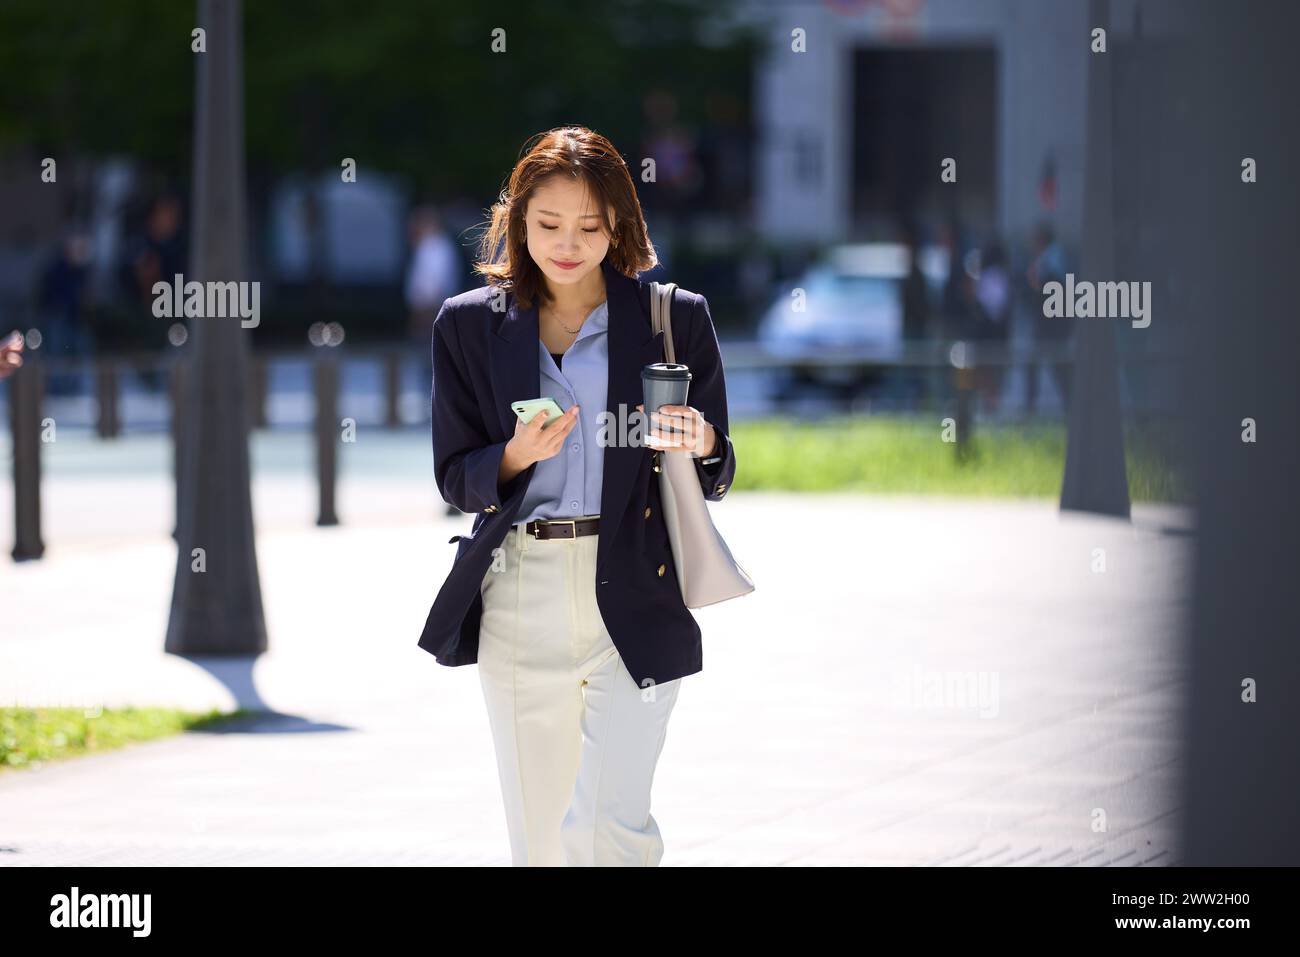 A woman walking down the street Stock Photo